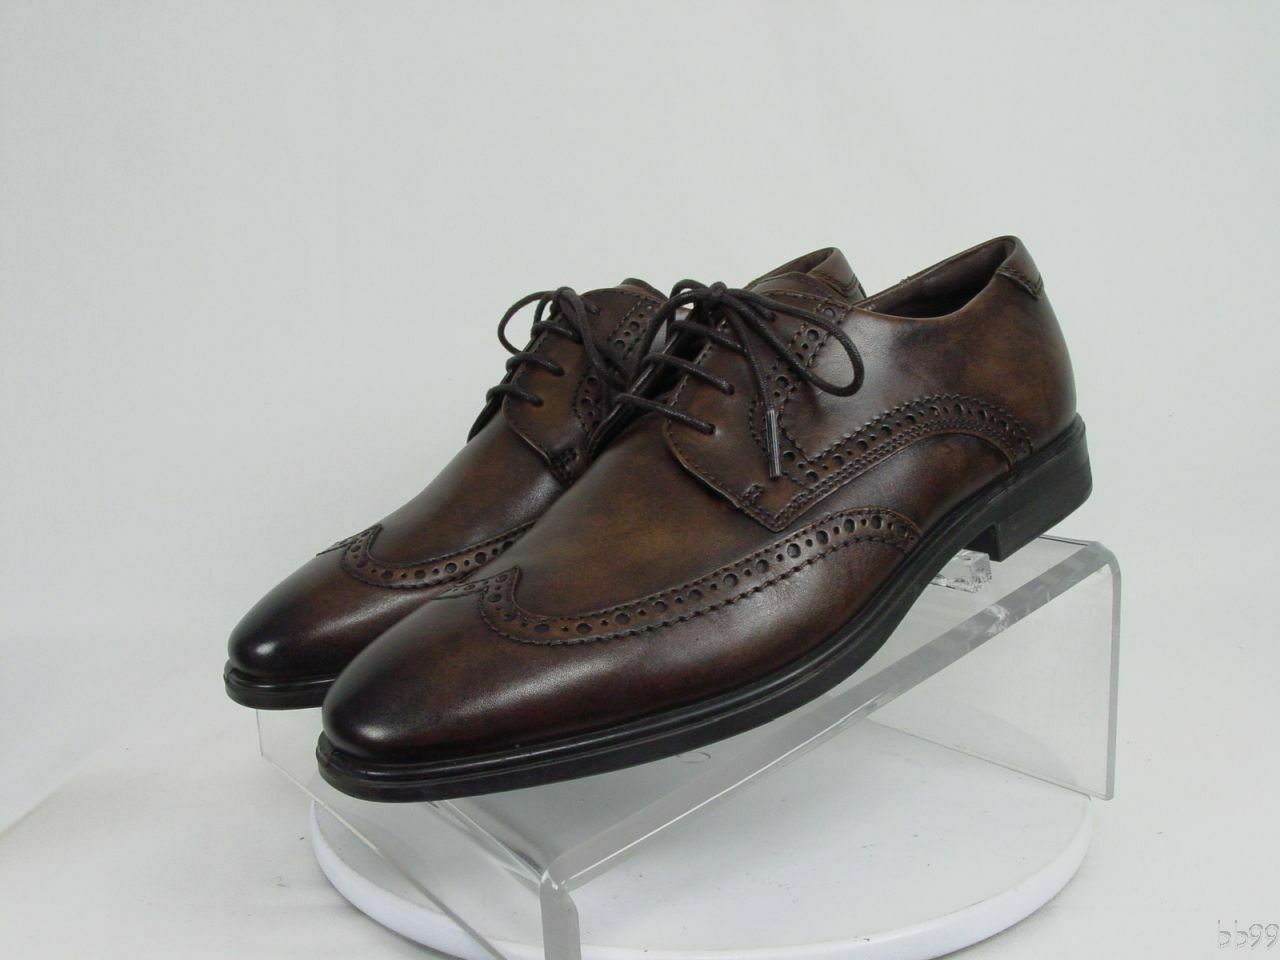 NEAR NU ECCO MELBOURNE Men 7.5 41 Brown Brogue Leather Wingtip Dress Shoes